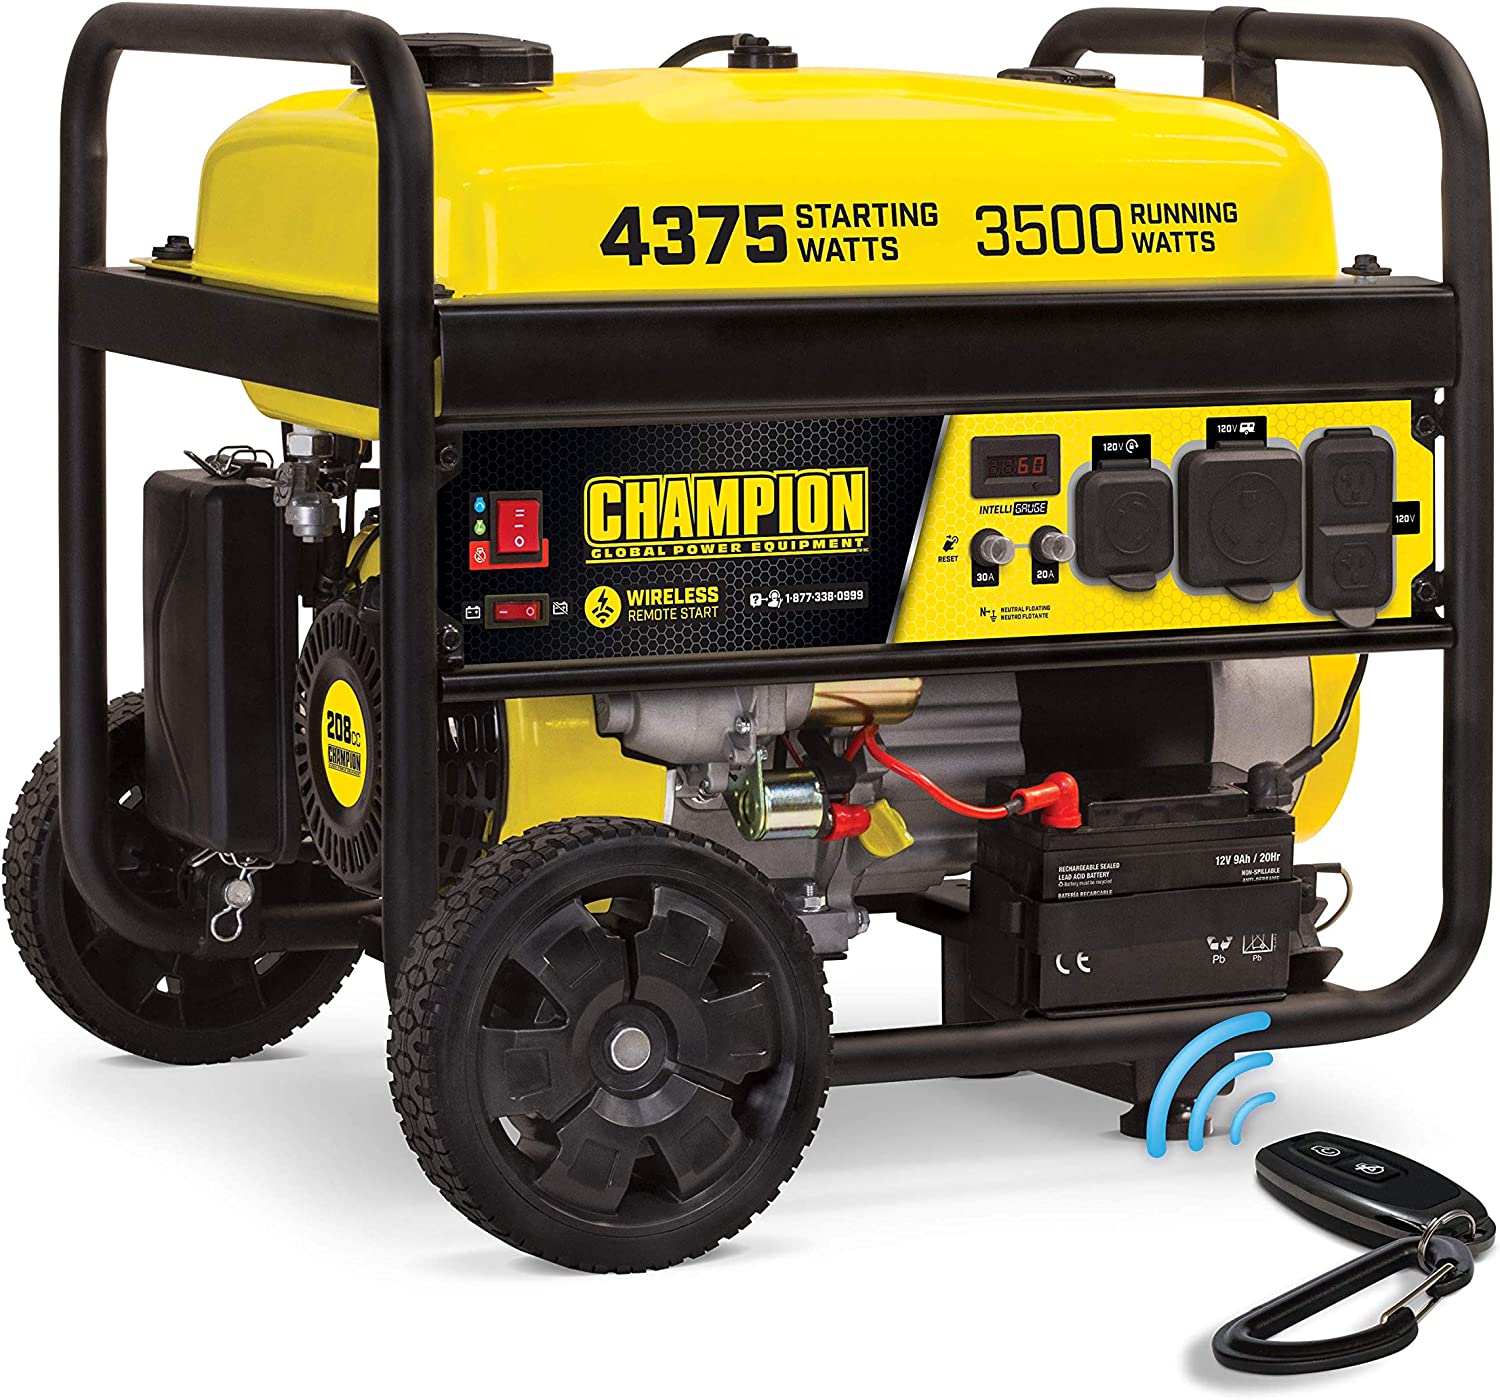 Champion Power Equipment 100554 4375/3500-Watt RV Ready Portable Generator w/ Wireless Remote Start & CARB-Compliance $395 + Free Shipping